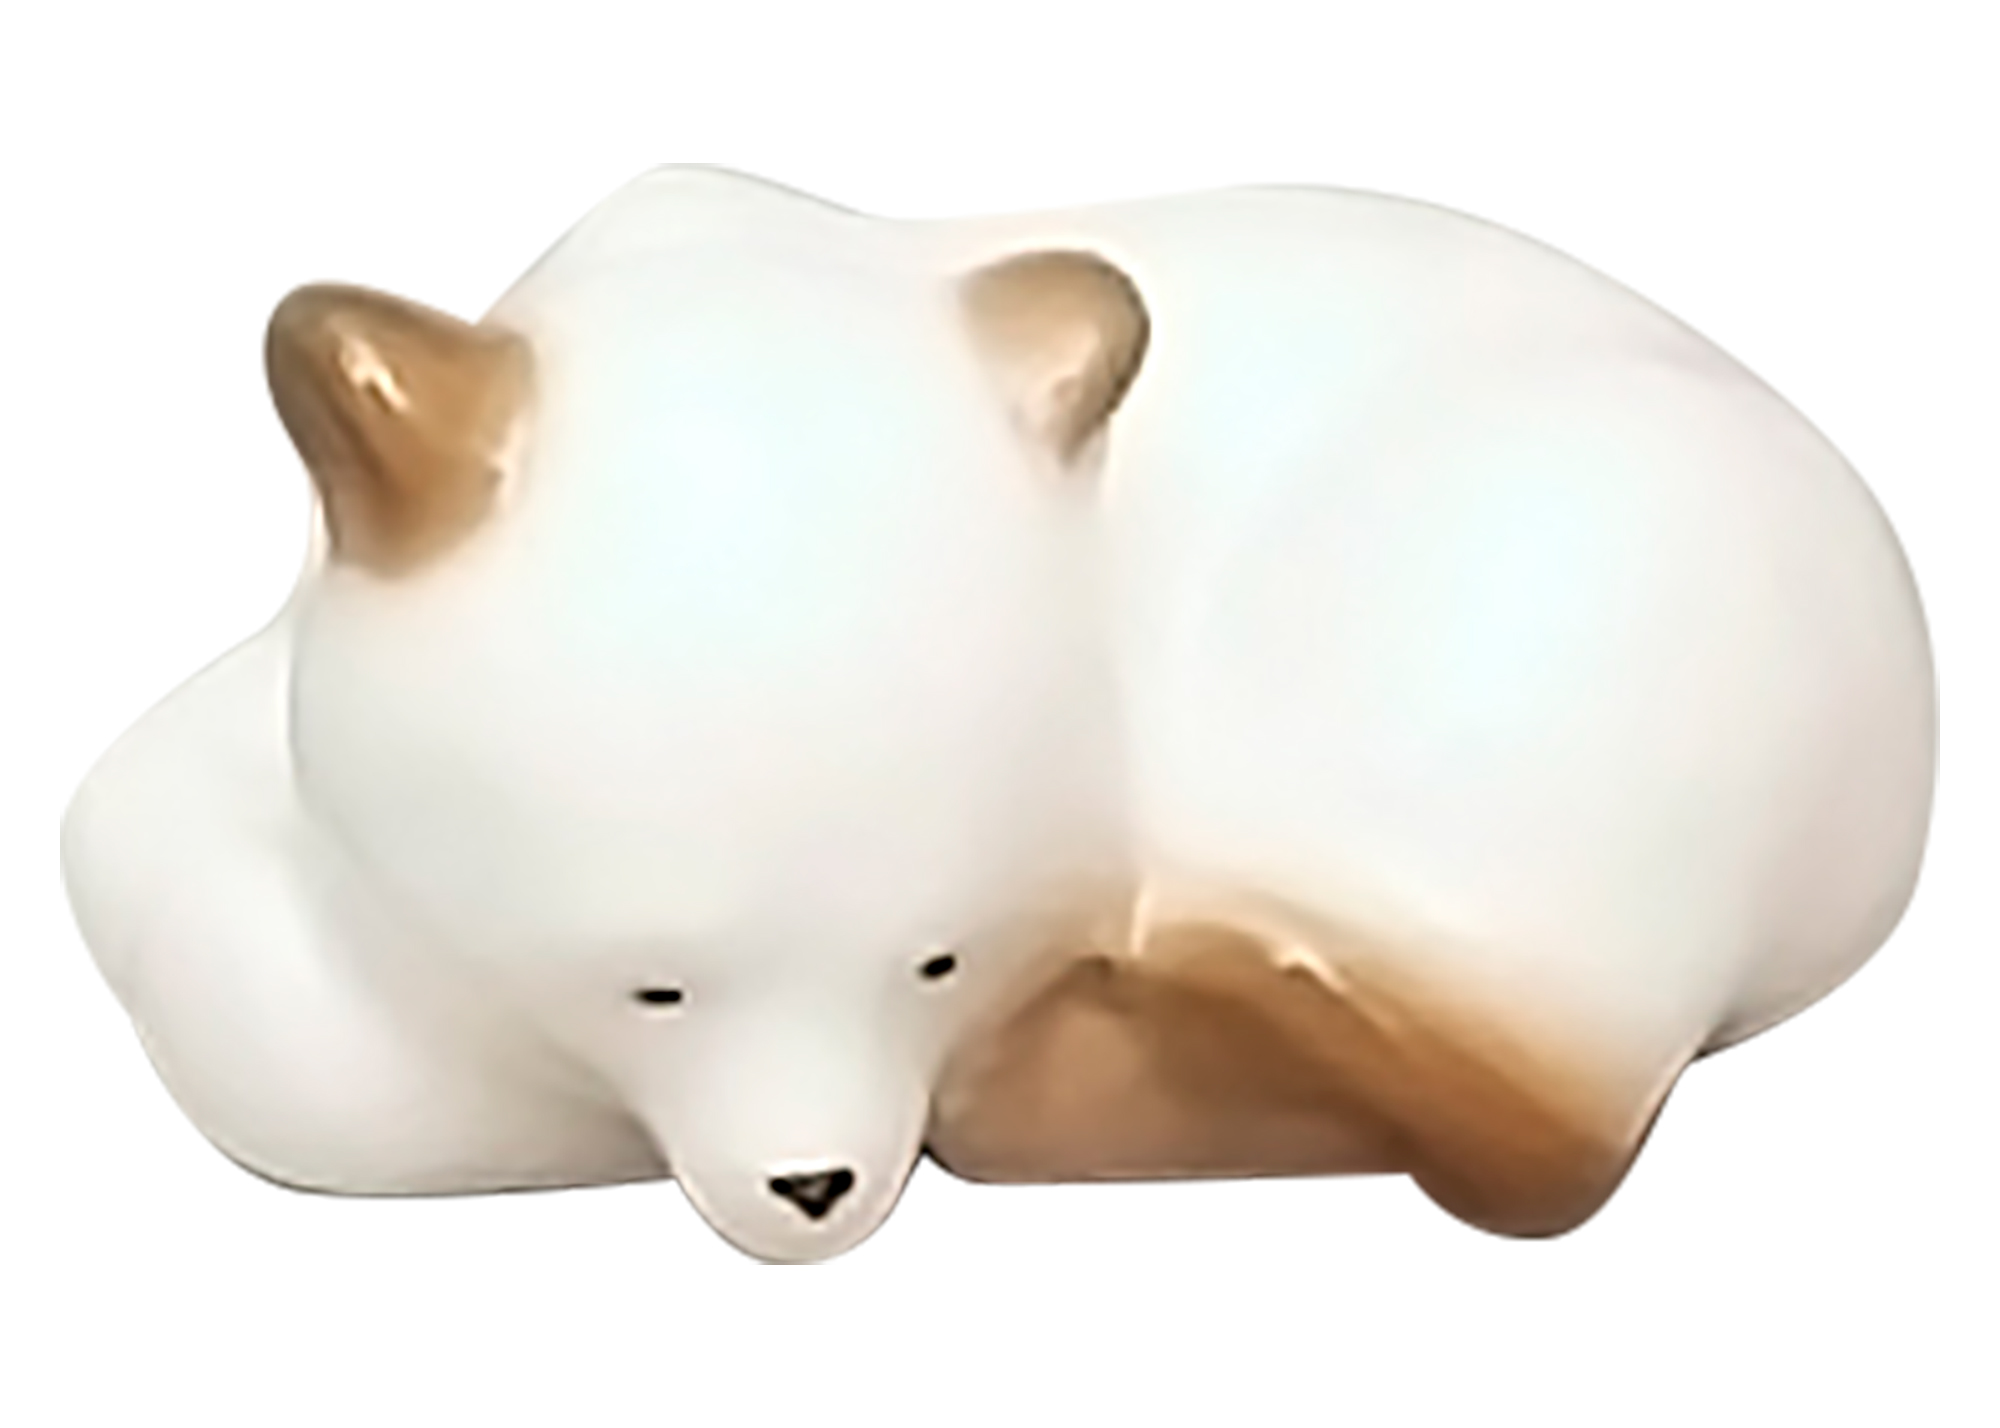 Buy Sleeping Polar Bear Cub Figurine at GoldenCockerel.com